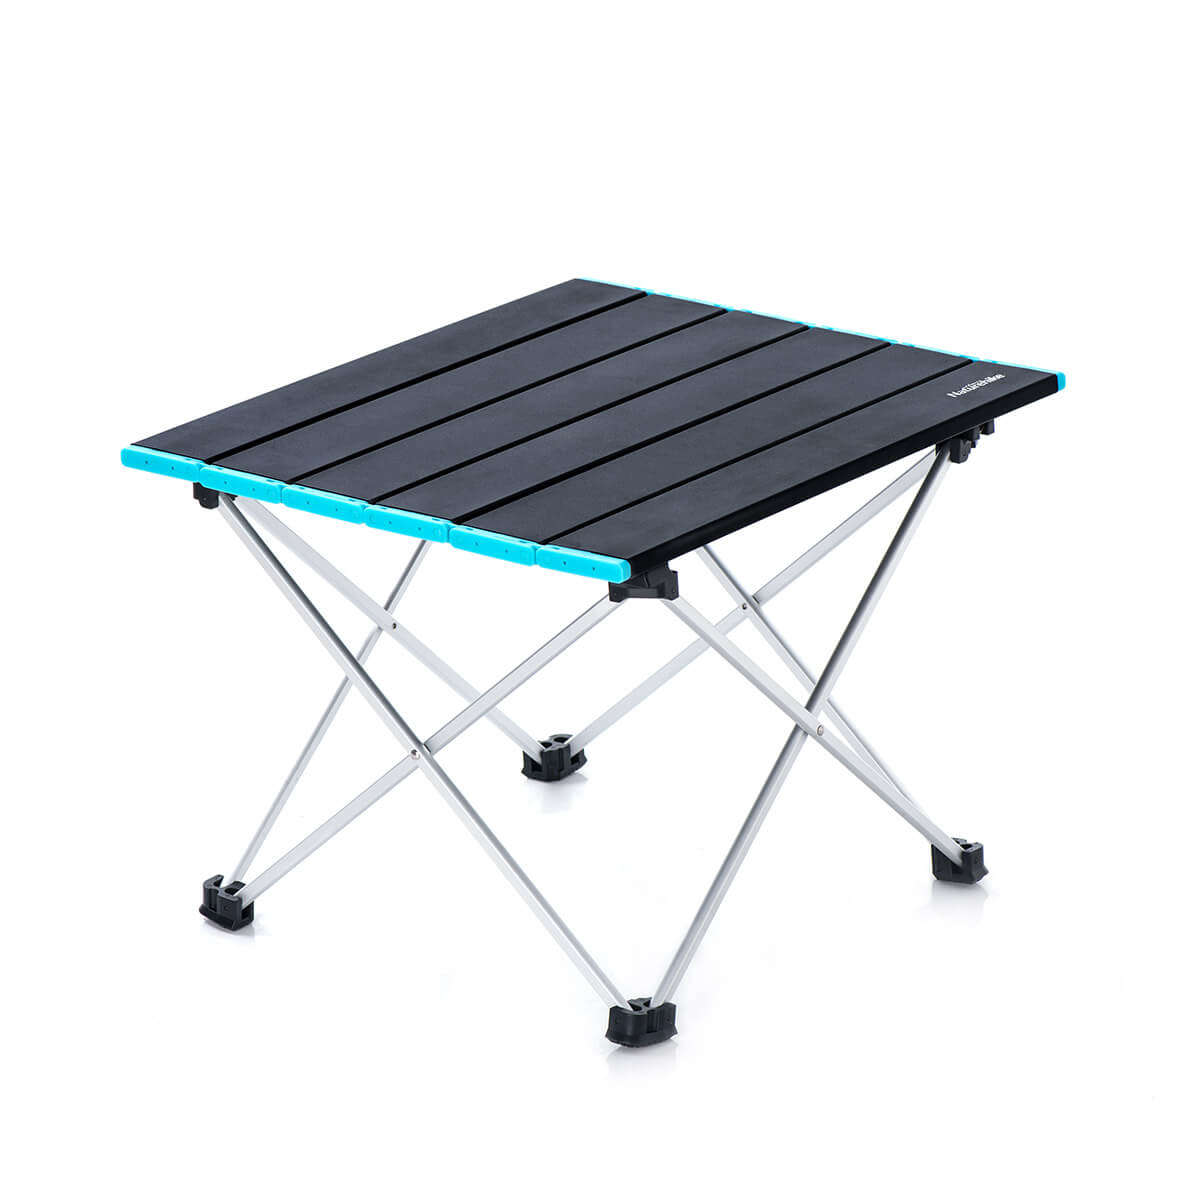 Ultralight aluminum alloy folding table